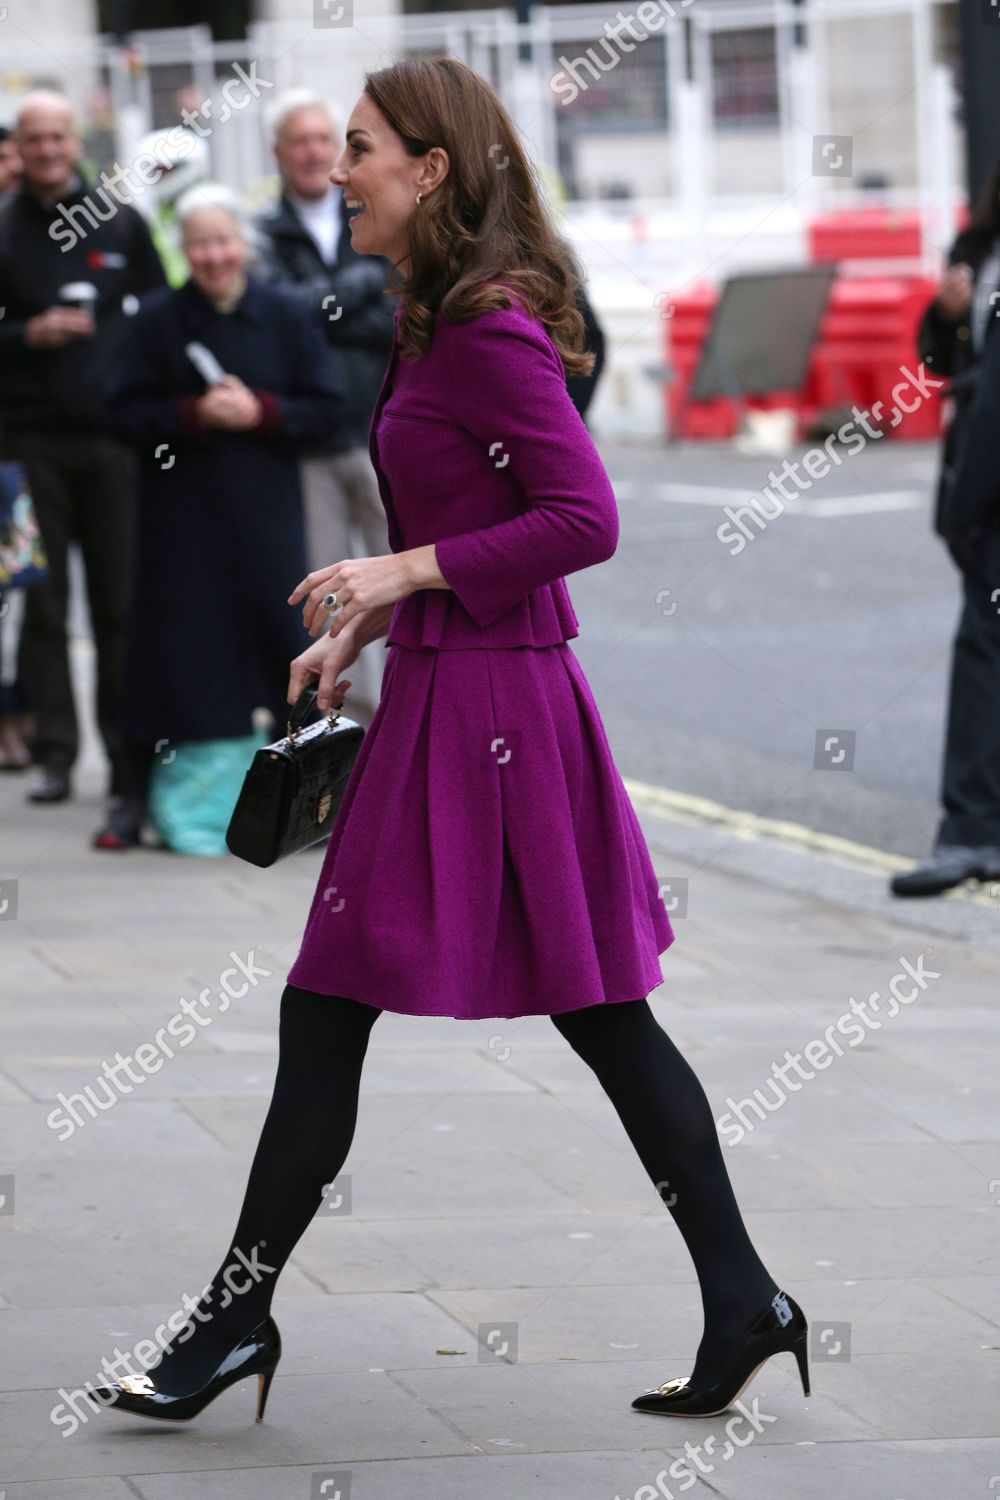 catherine-duchess-of-cambridge-visit-to-the-royal-opera-house-london-uk-shutterstock-editorial-10063920m.jpg